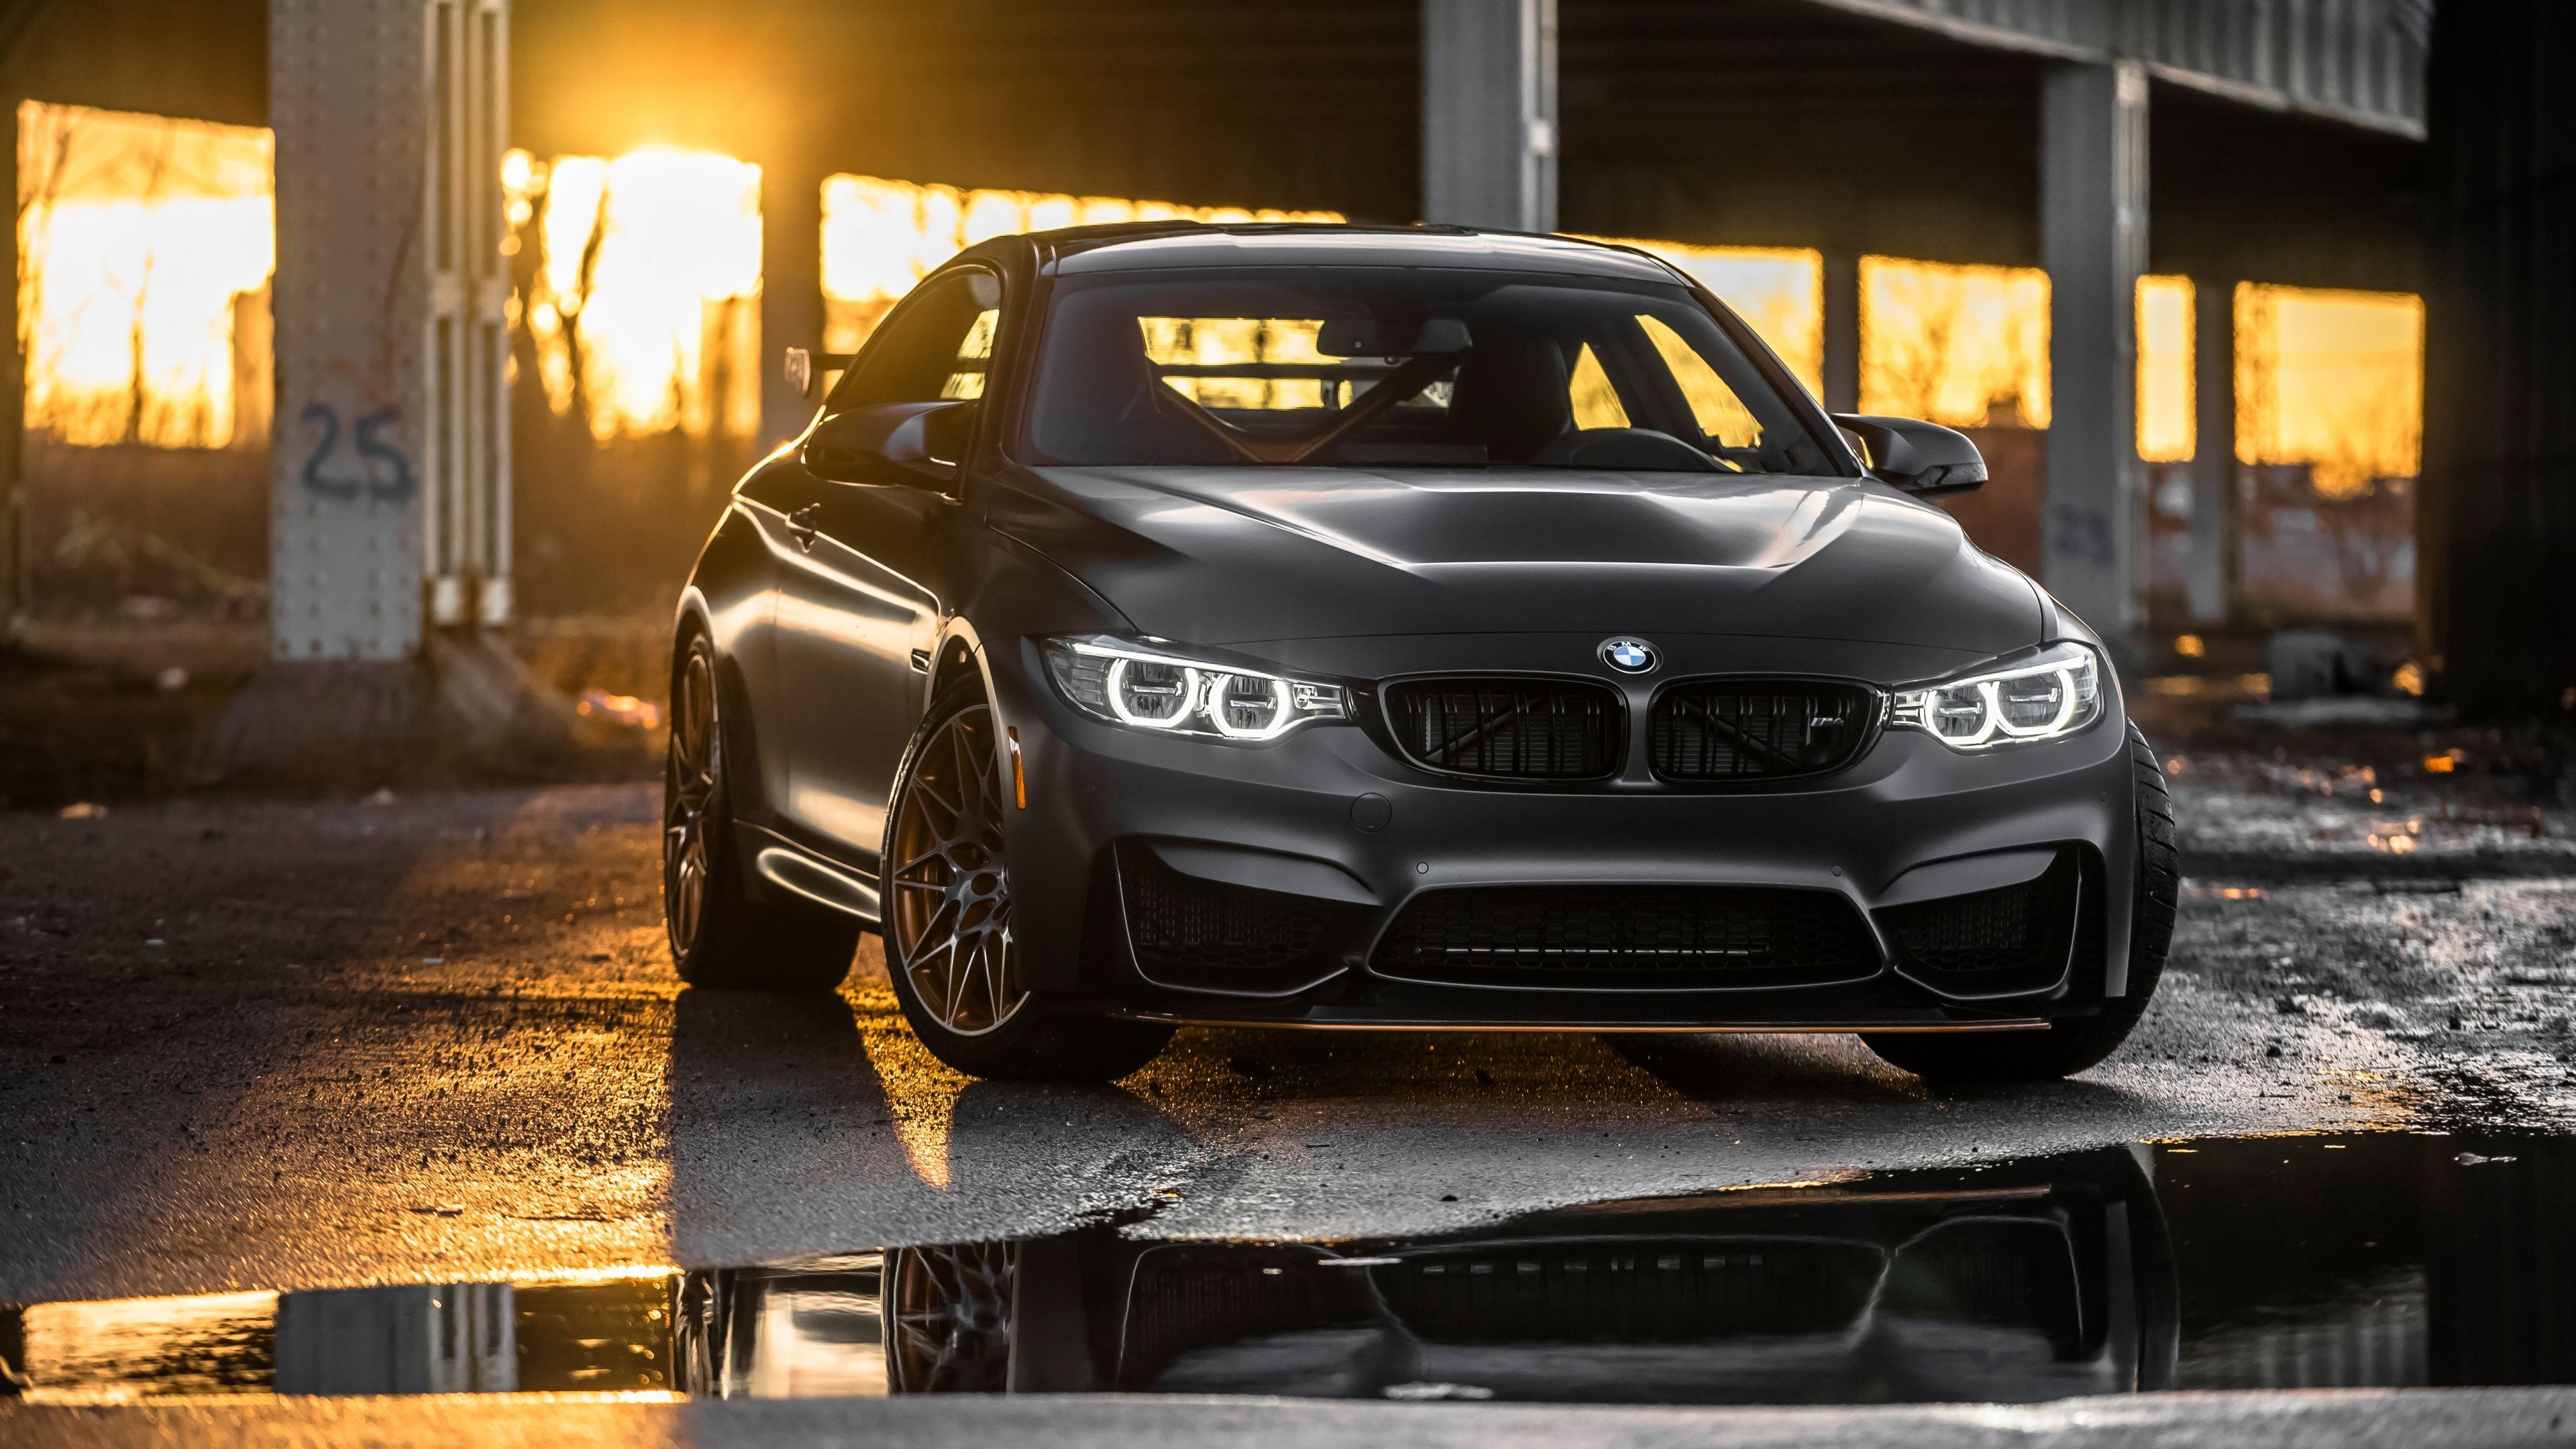 BMW M4, HD wallpapers, Top-rated performance, Impressive handling, 3840x2160 4K Desktop